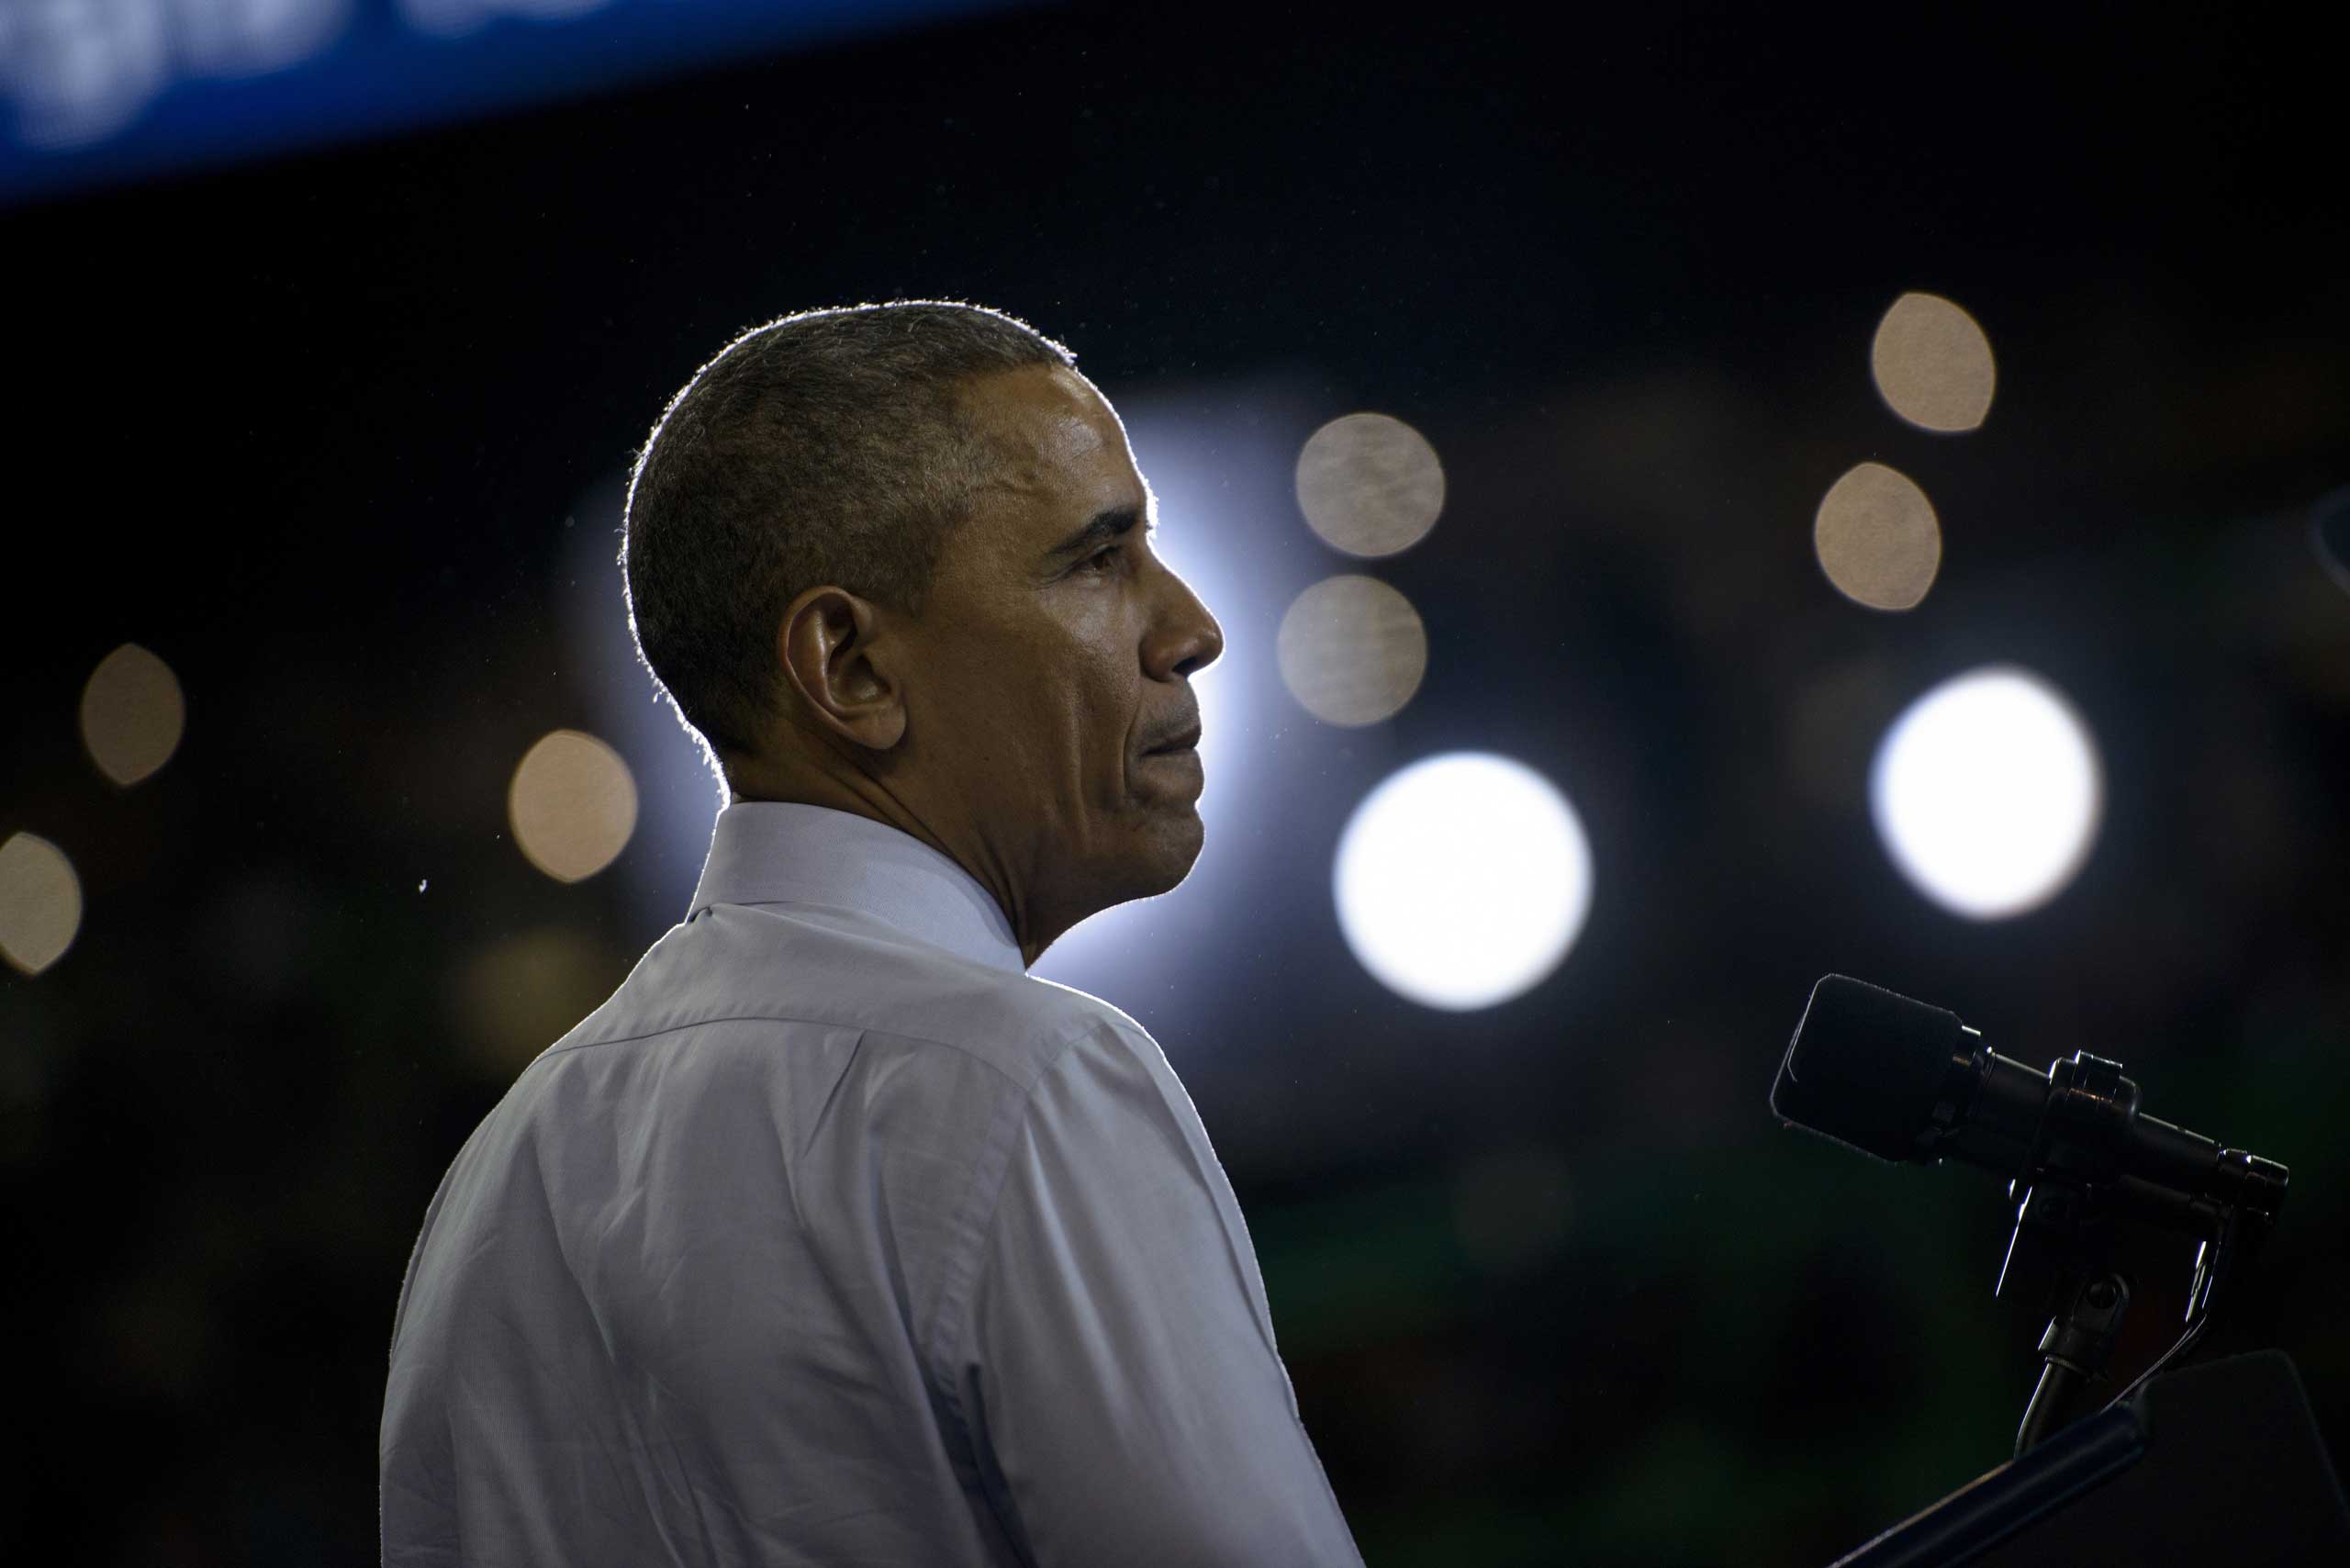 US President Barack Obama pauses while speaking at Georgia Tech on March 10, 2015 in Atlanta, Georgia. (Brendan Smialowski—AFP/Getty Images)